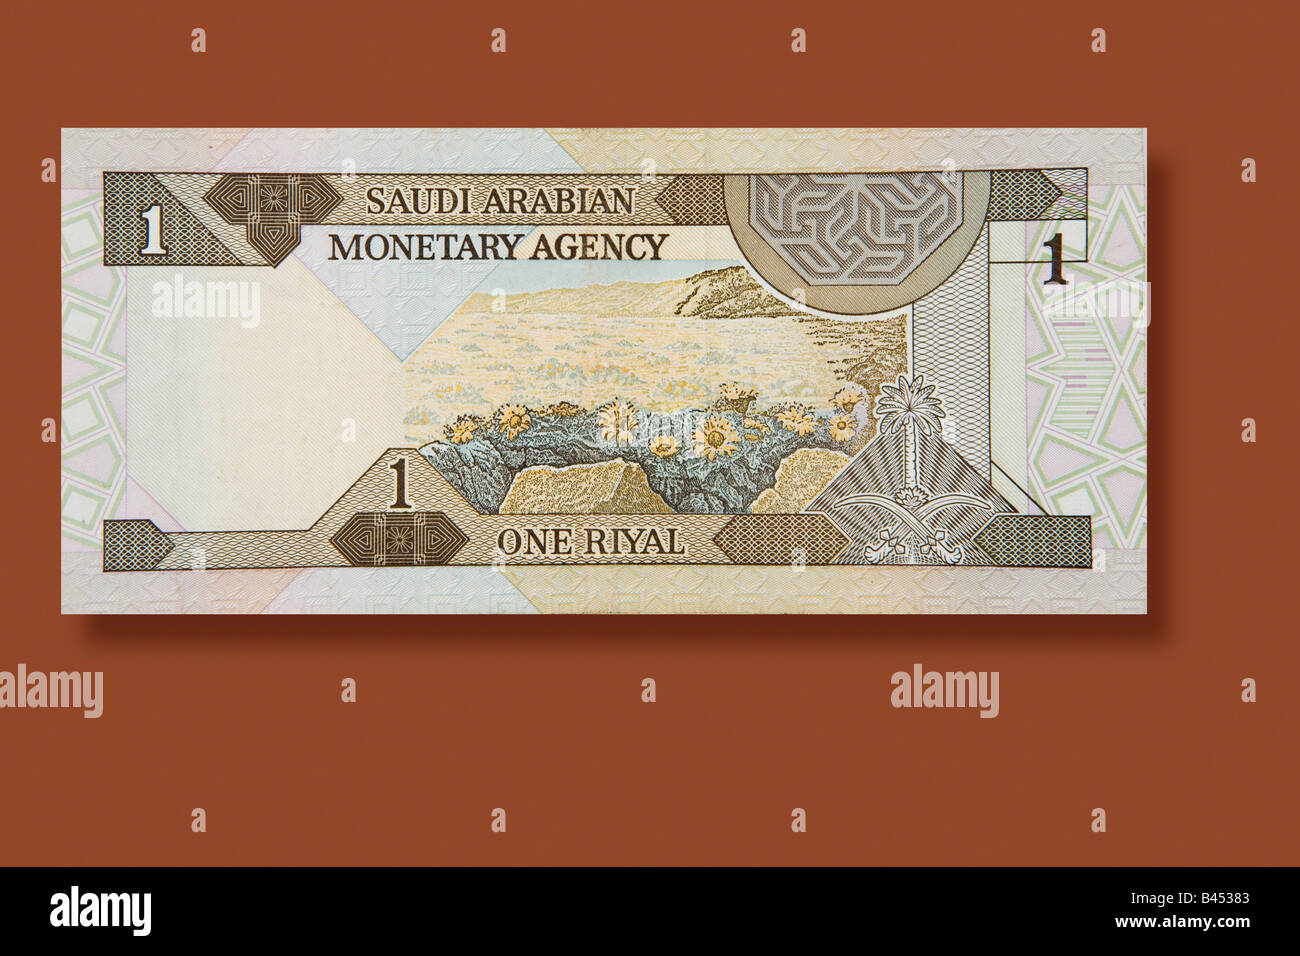 One Riyal note from Saudi Arabian Monetary Agency Stock Photo